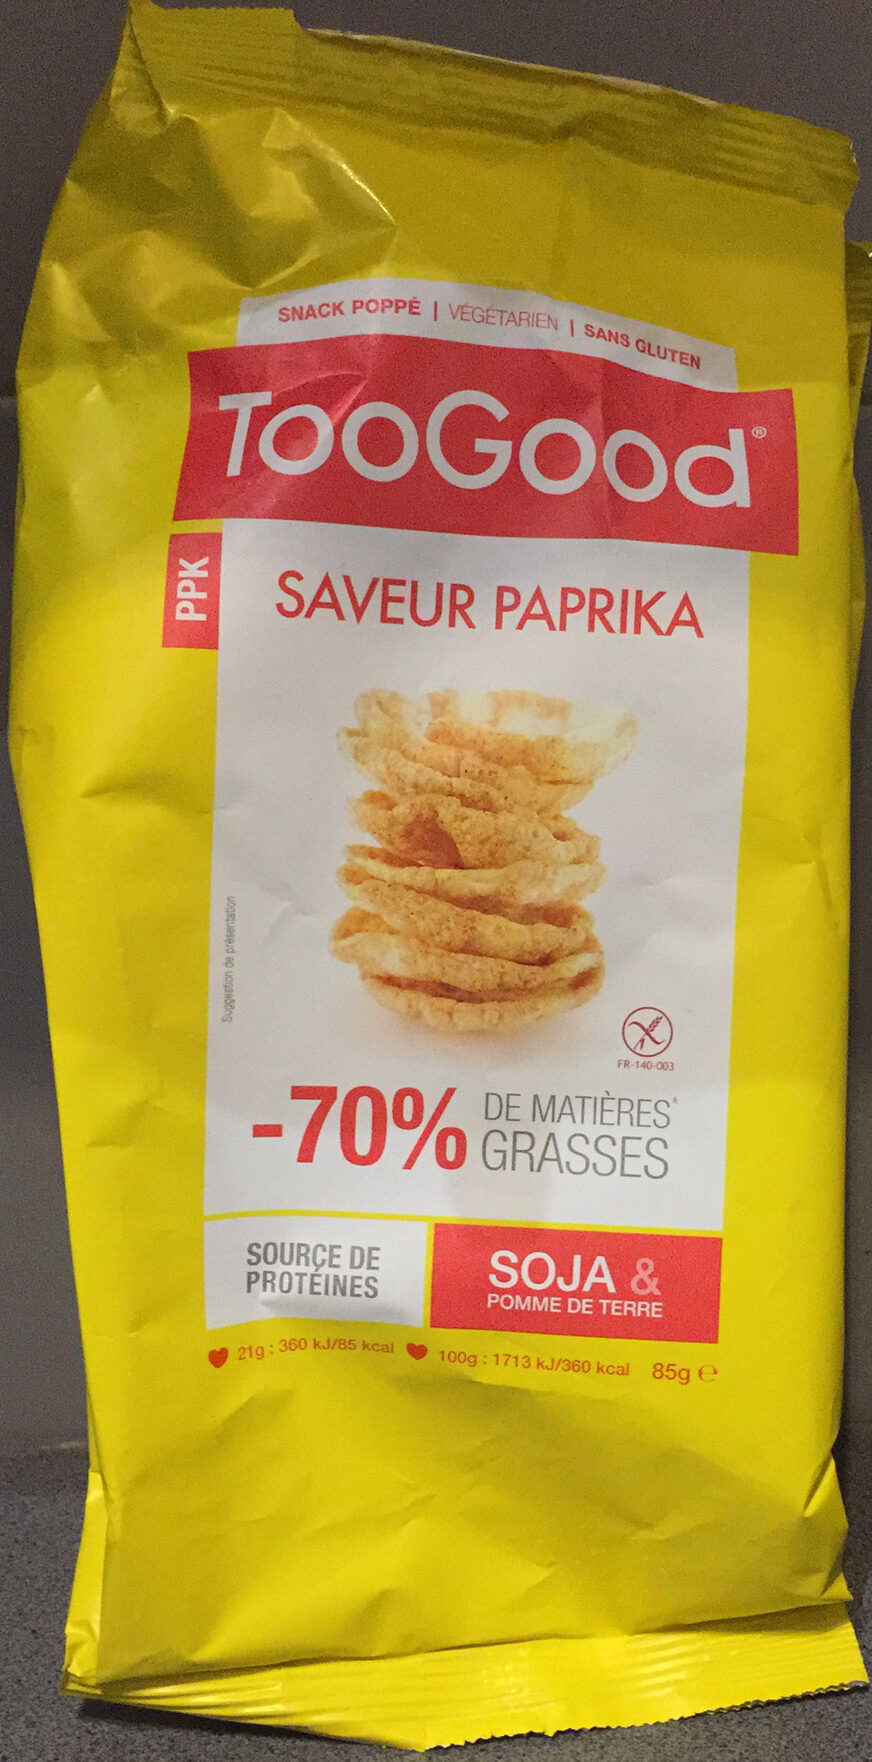 Snack poppé saveur paprika - Product - fr